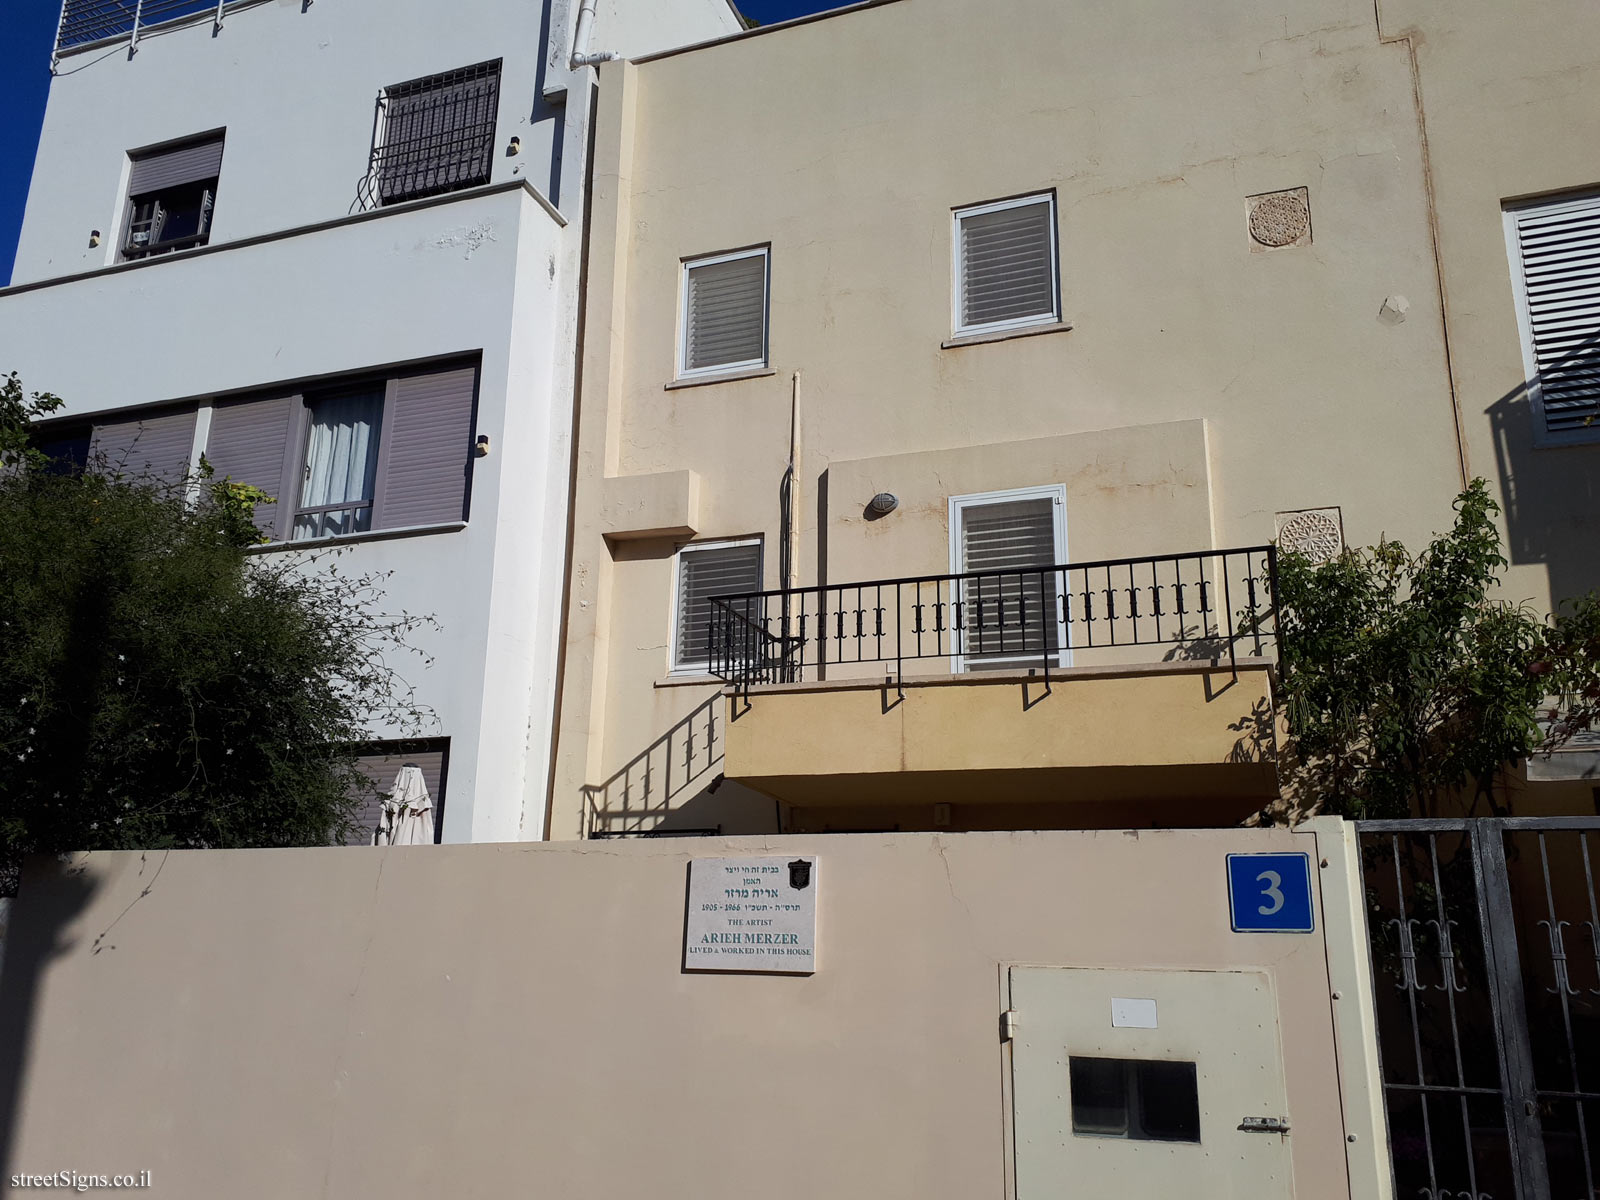 The house of Arieh Merzer - Birnboim St 3, Tel Aviv-Yafo, Israel